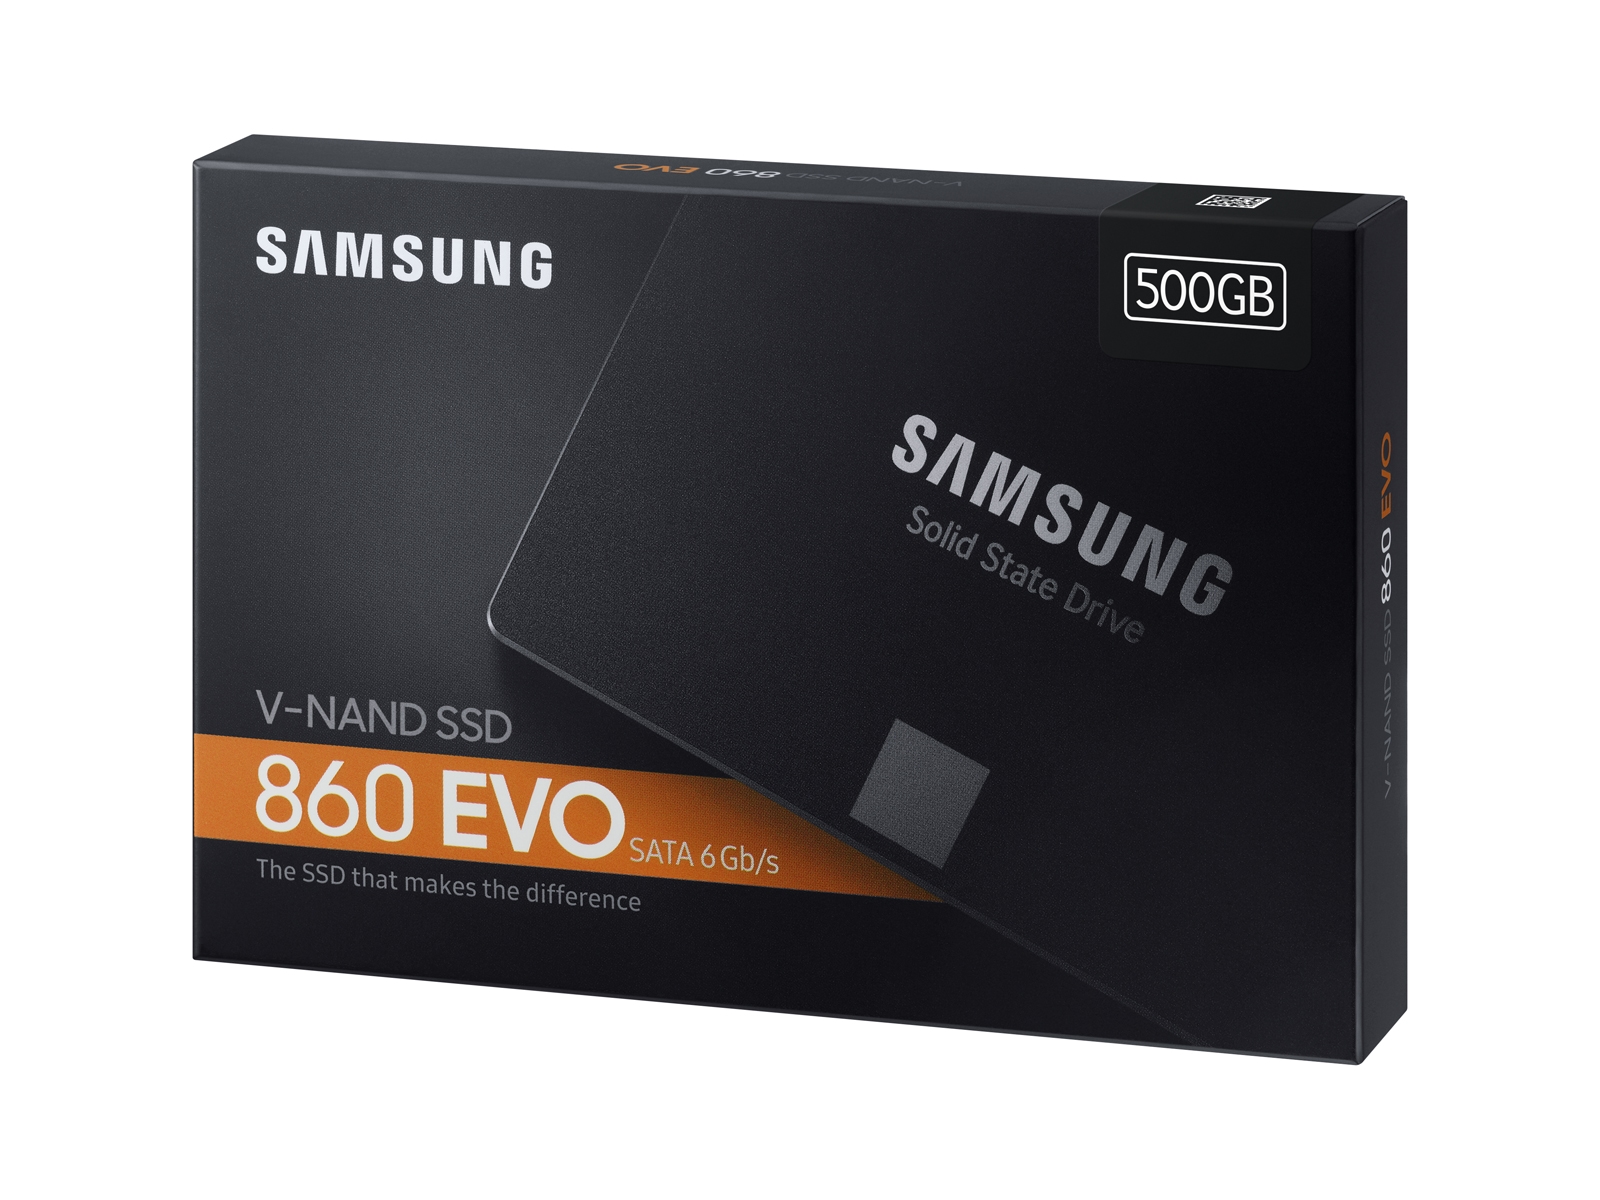 Maiden gentage lektie SSD 860 EVO 2.5" SATA III 500GB Memory & Storage - MZ-76E500B/AM | Samsung  US